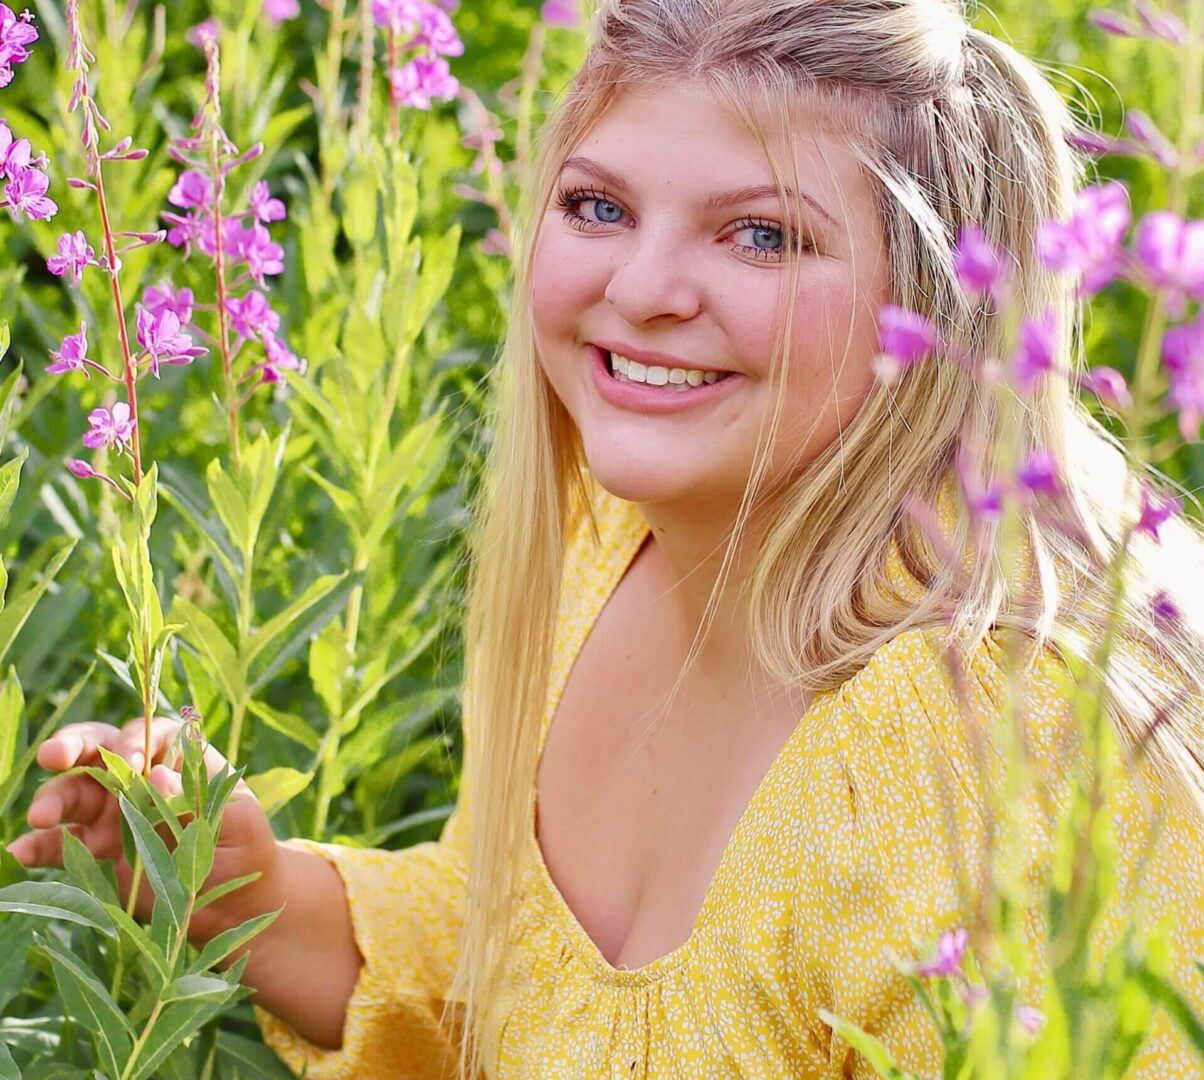 a beautiful girl in the flowers garden